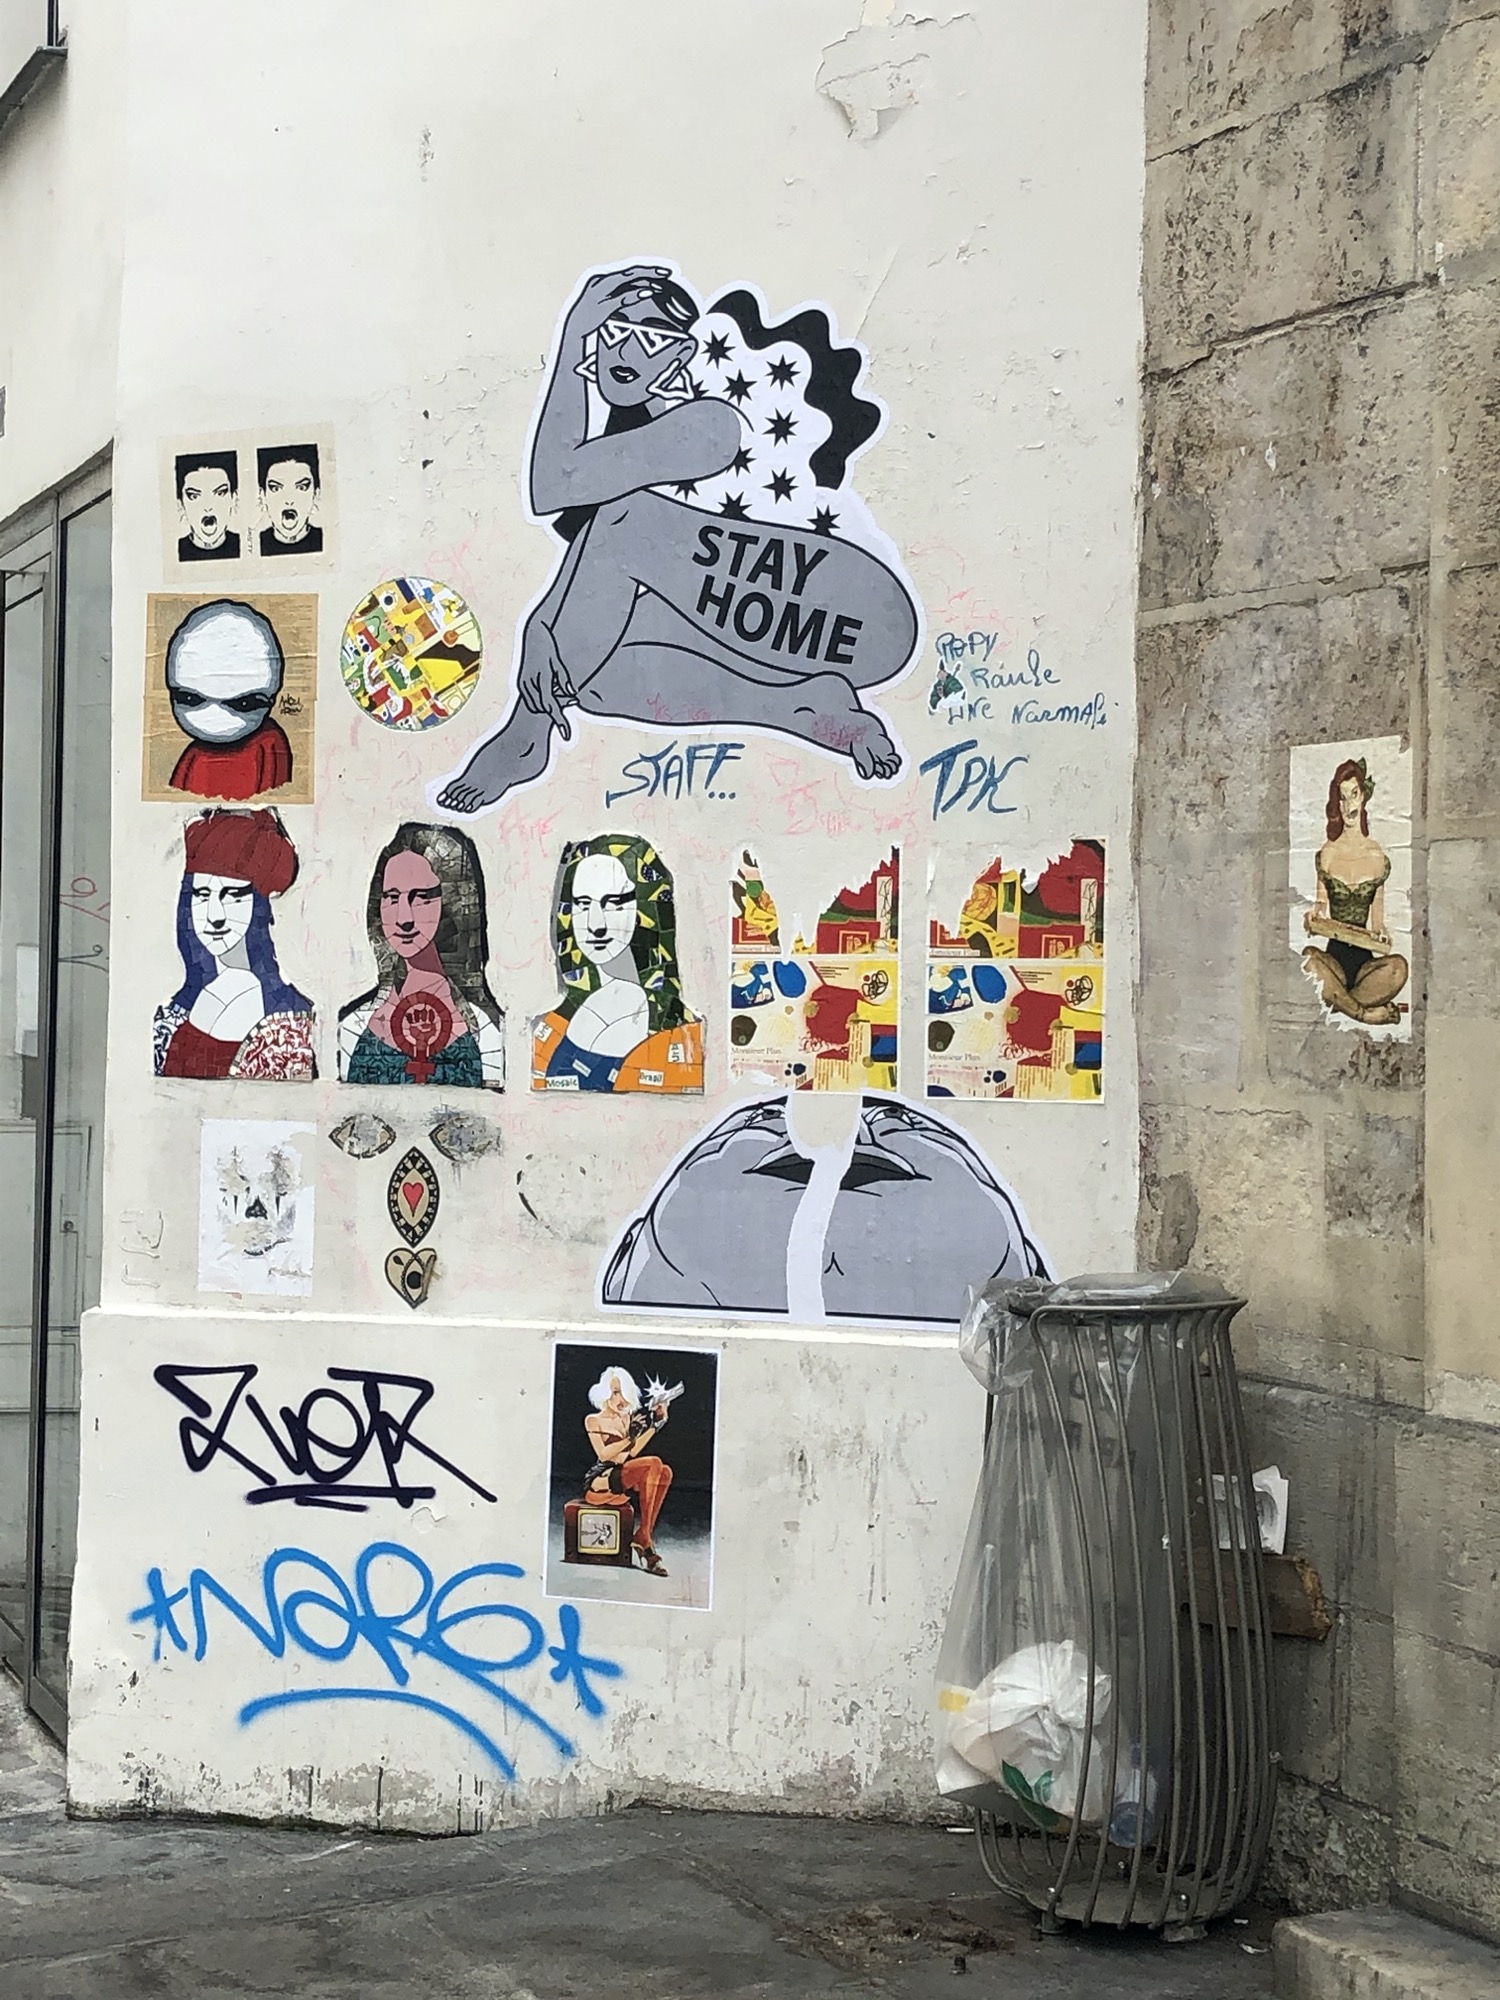 Graffiti 4171  captured by Monsieur plus in Paris France